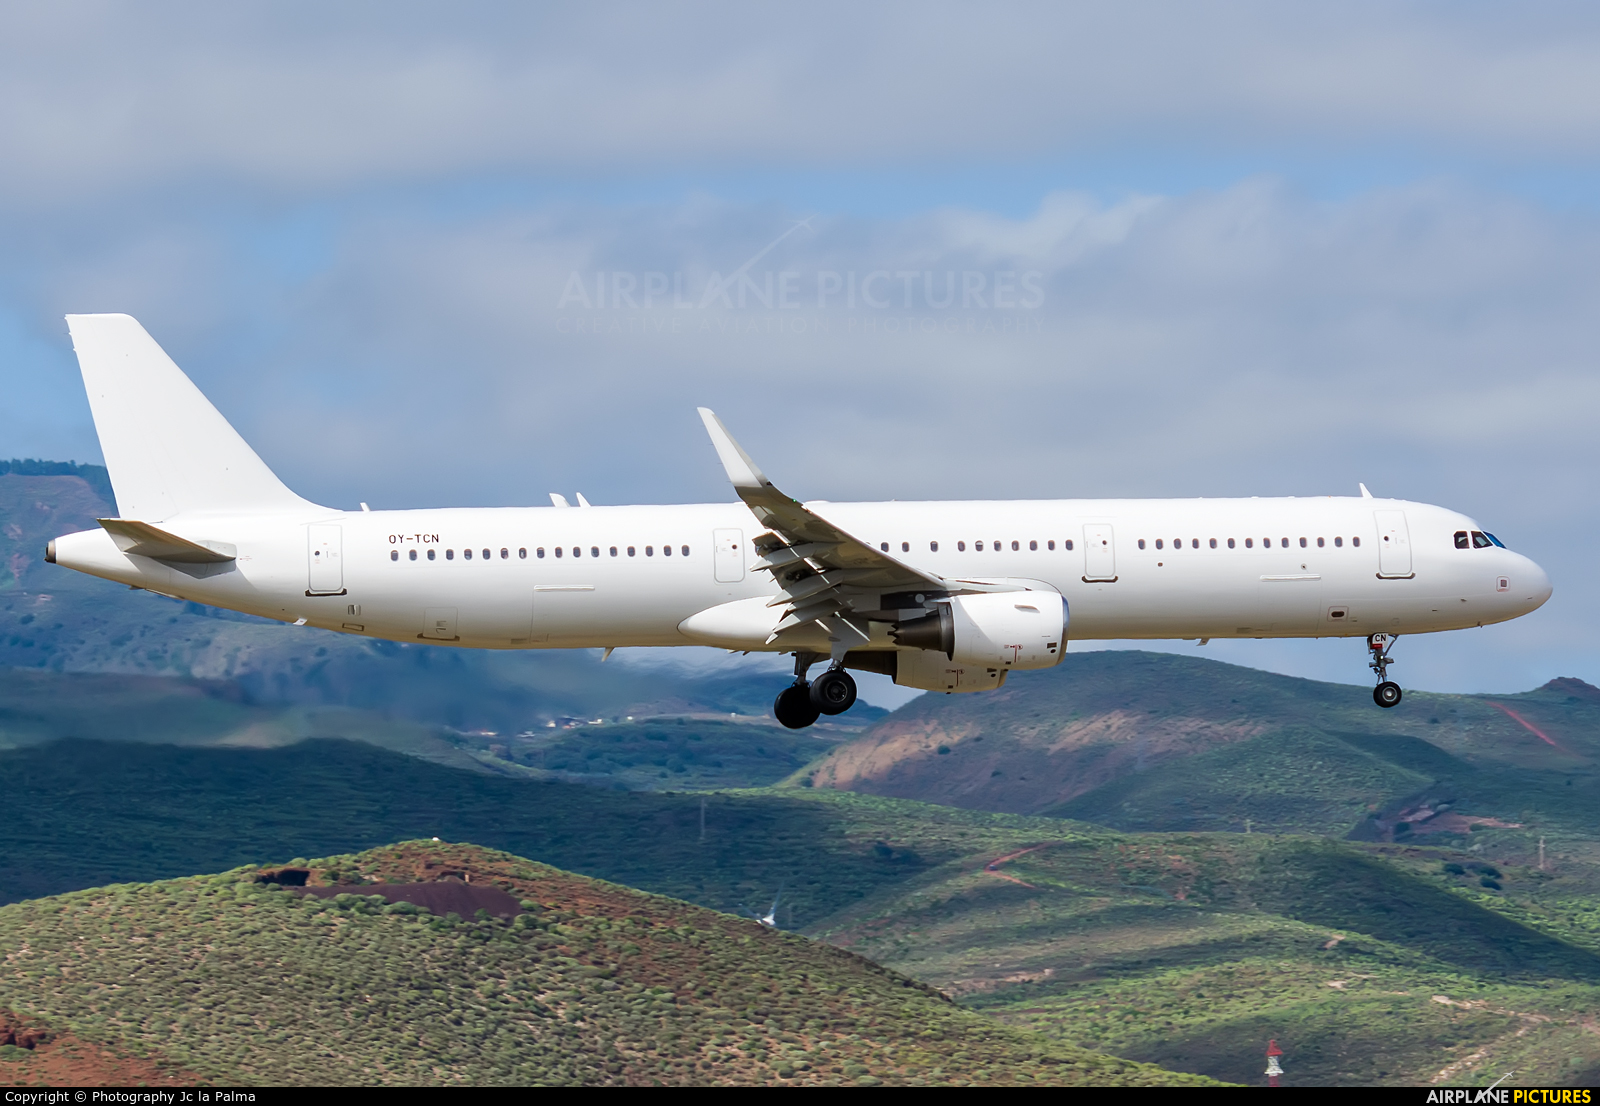 Sunclass Airlines OY-TCN aircraft at Aeropuerto de Gran Canaria